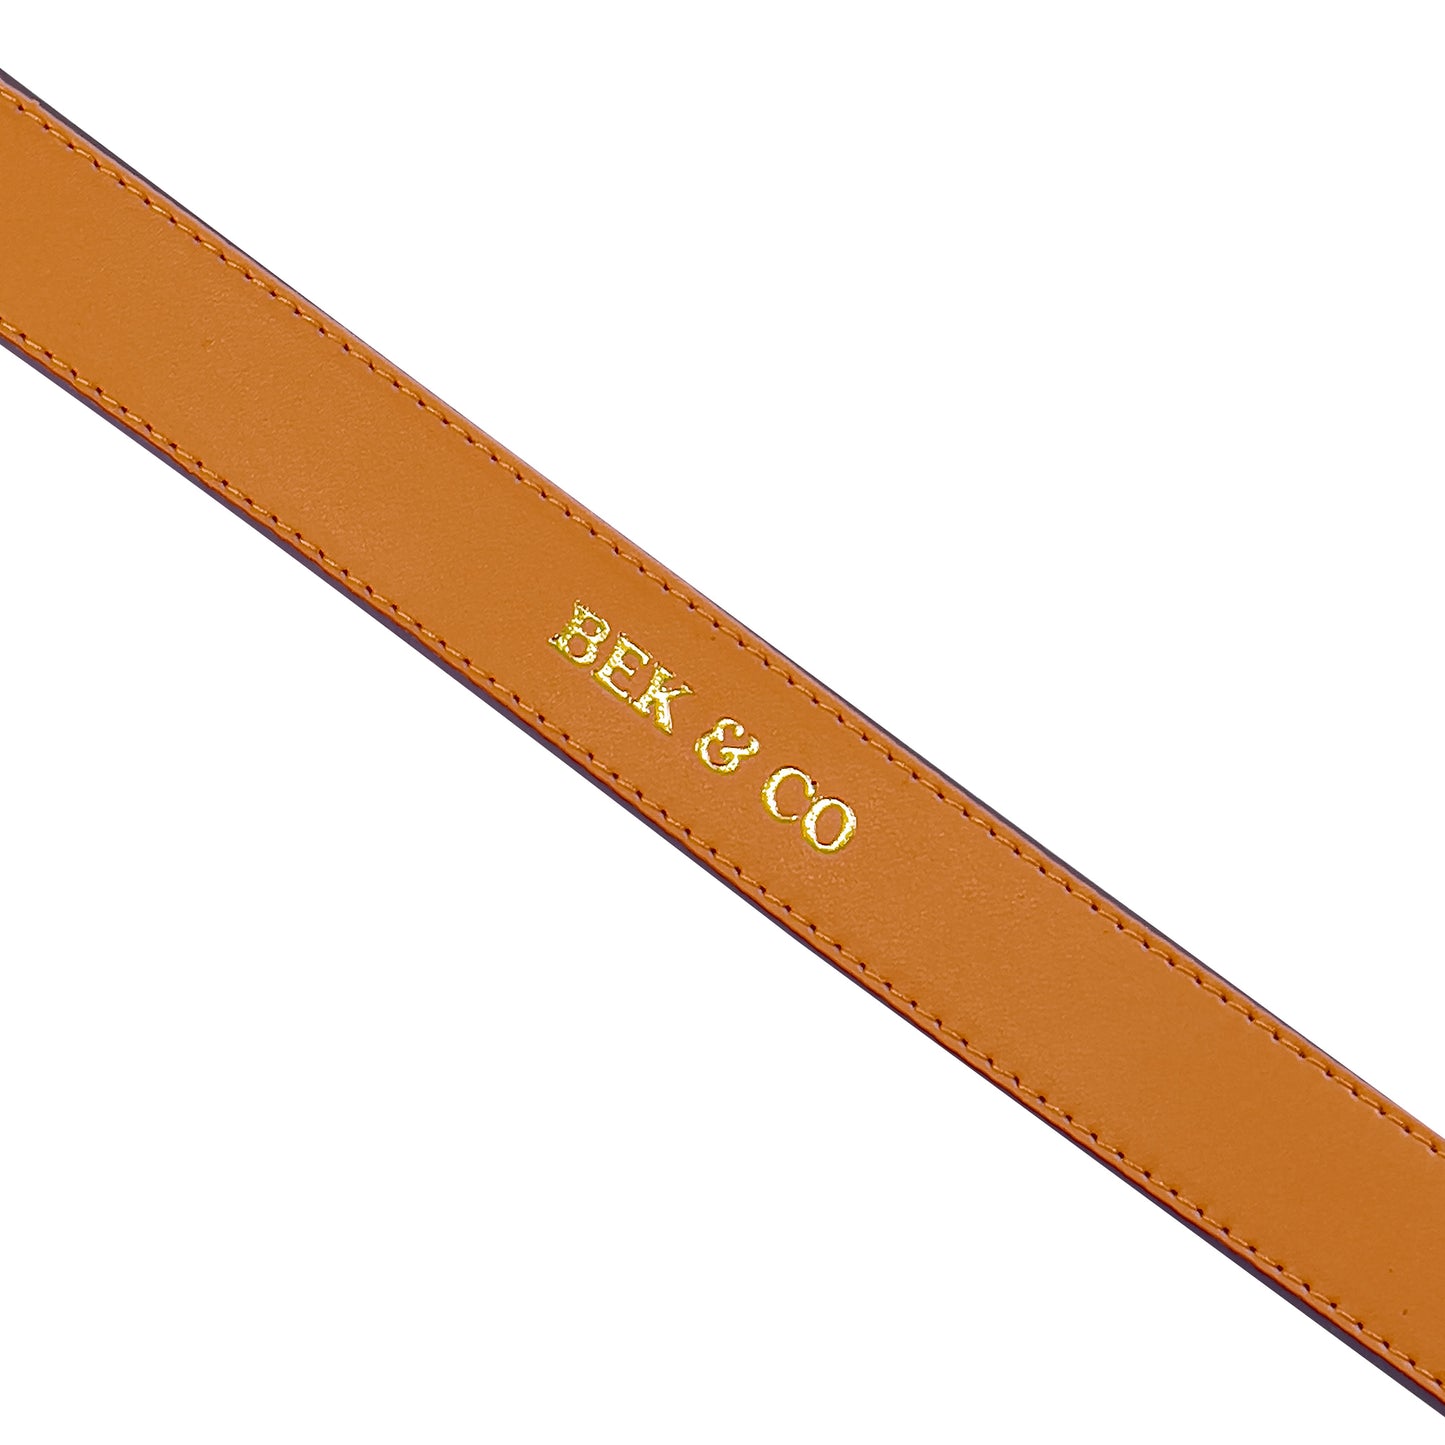 close up view of embossed Bek & Co logo on orange leather dog collar